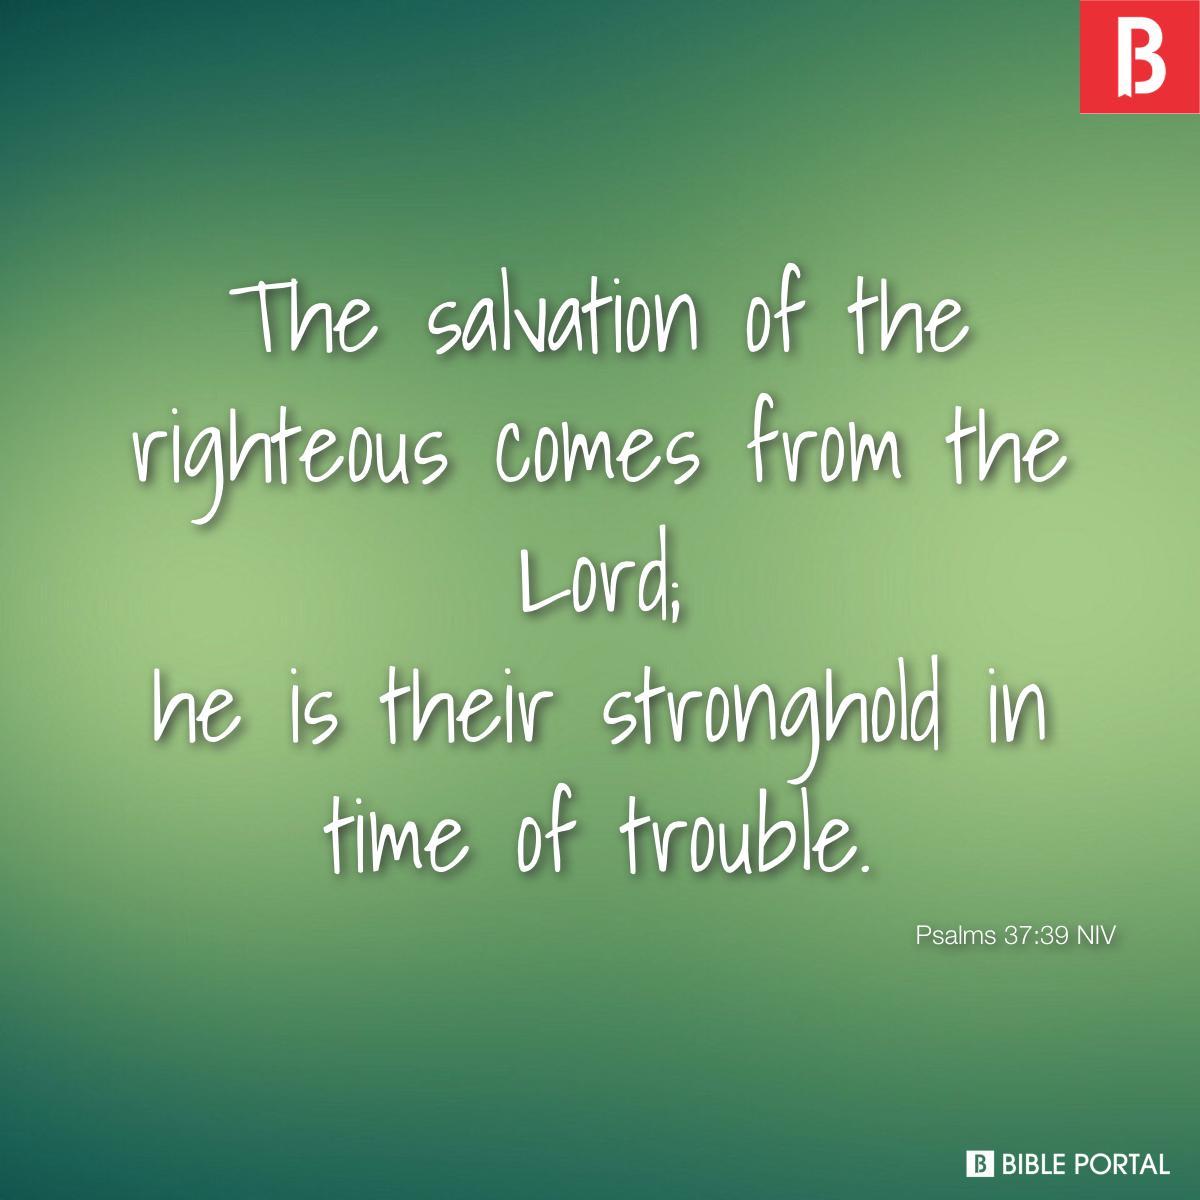 Psalms 37:39 NIV